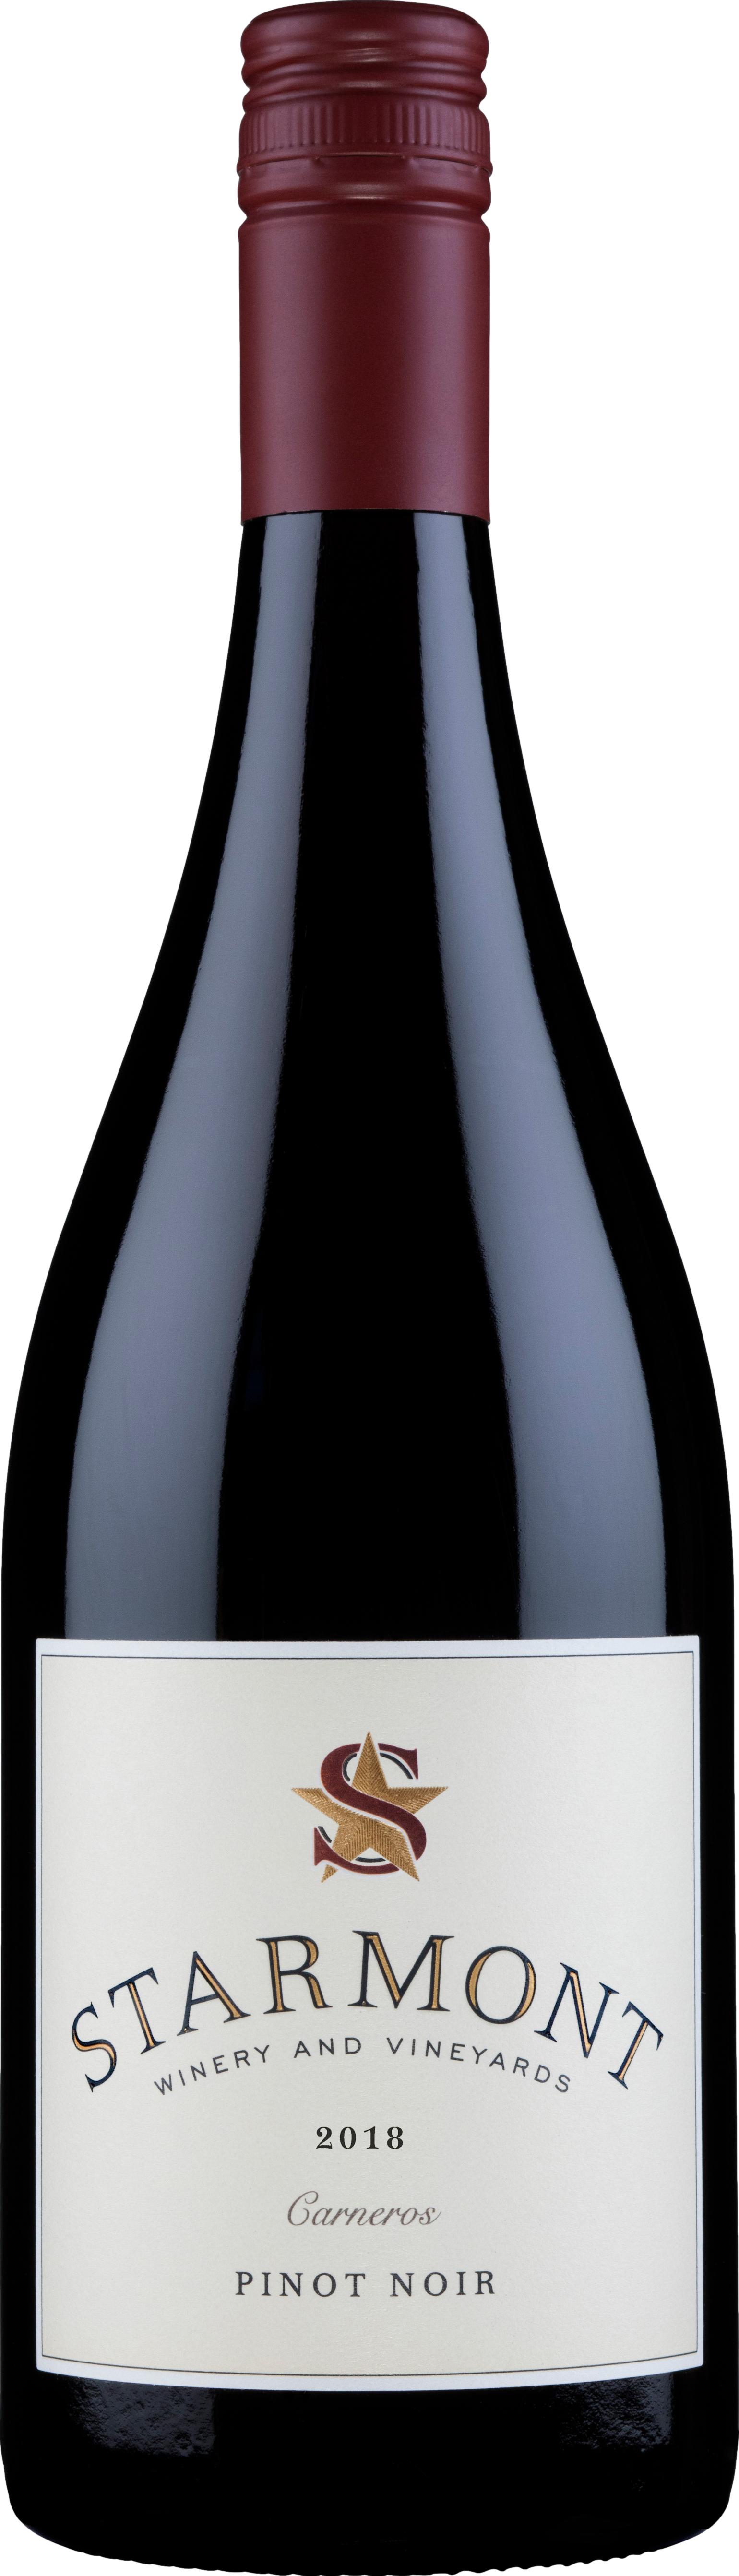 Starmont Pinot Noir 2018 Červené 14.5% 0.75 l